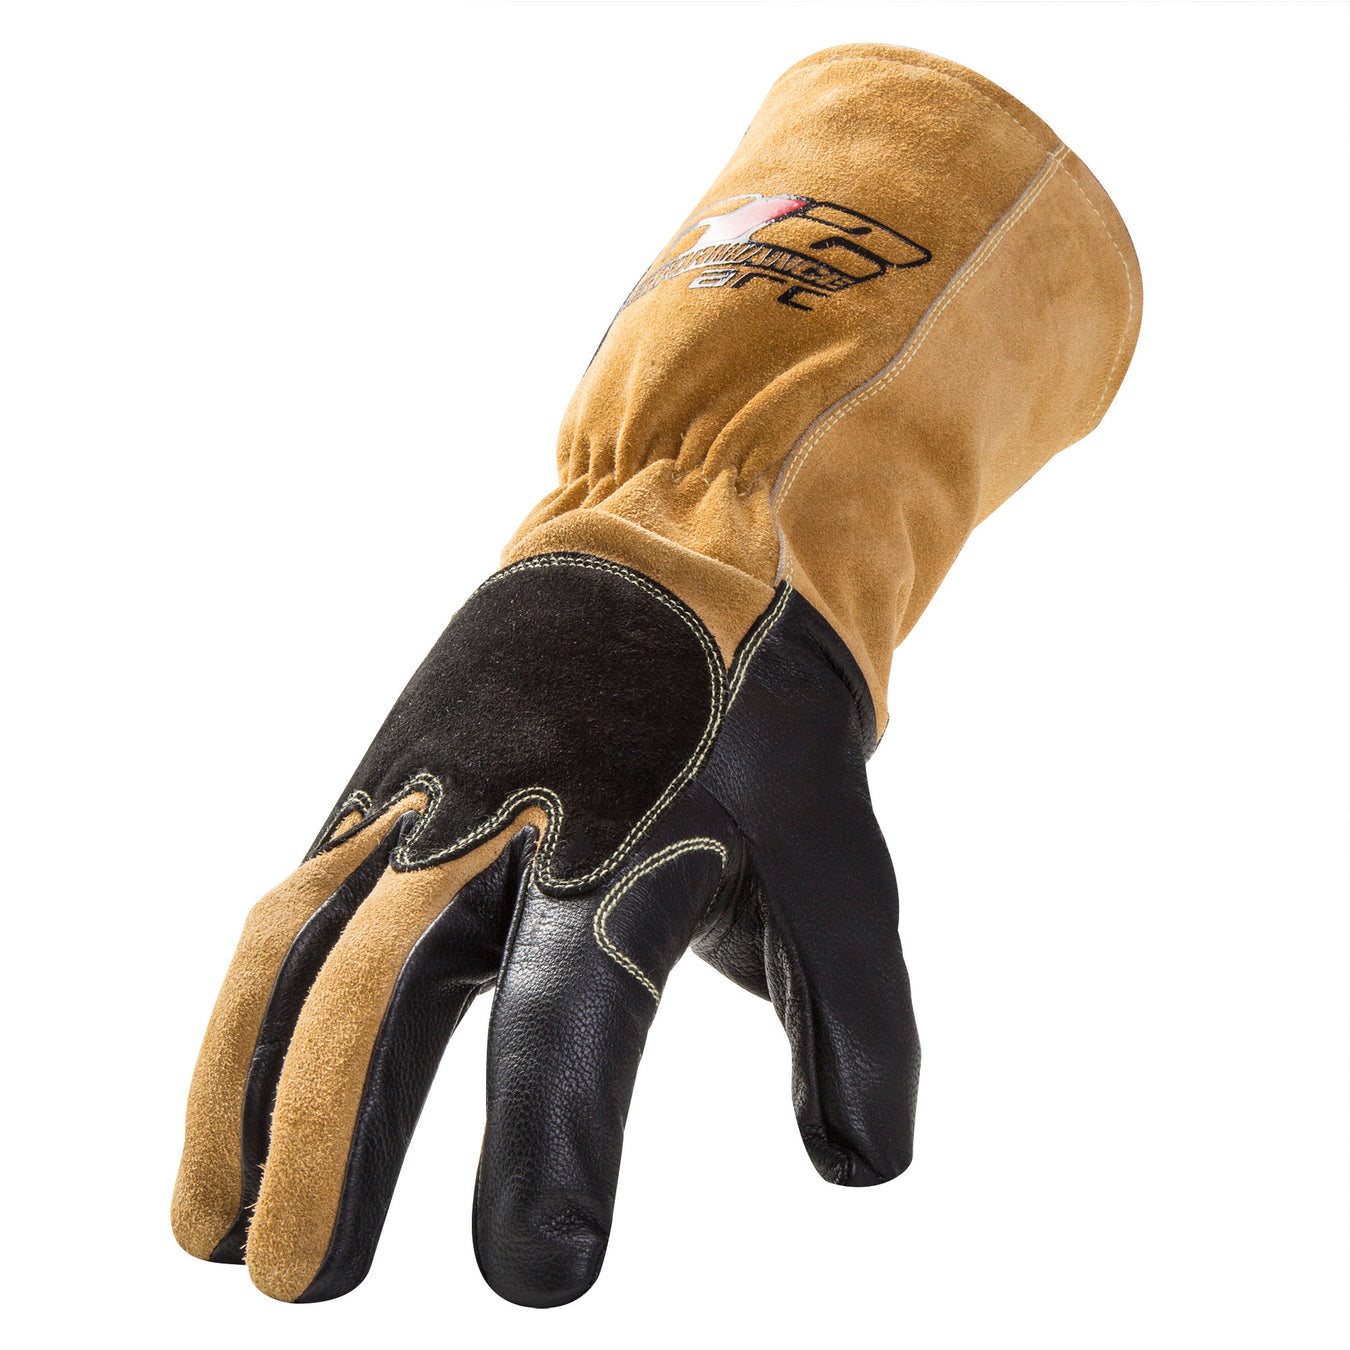 Welding & Fabricator Gloves